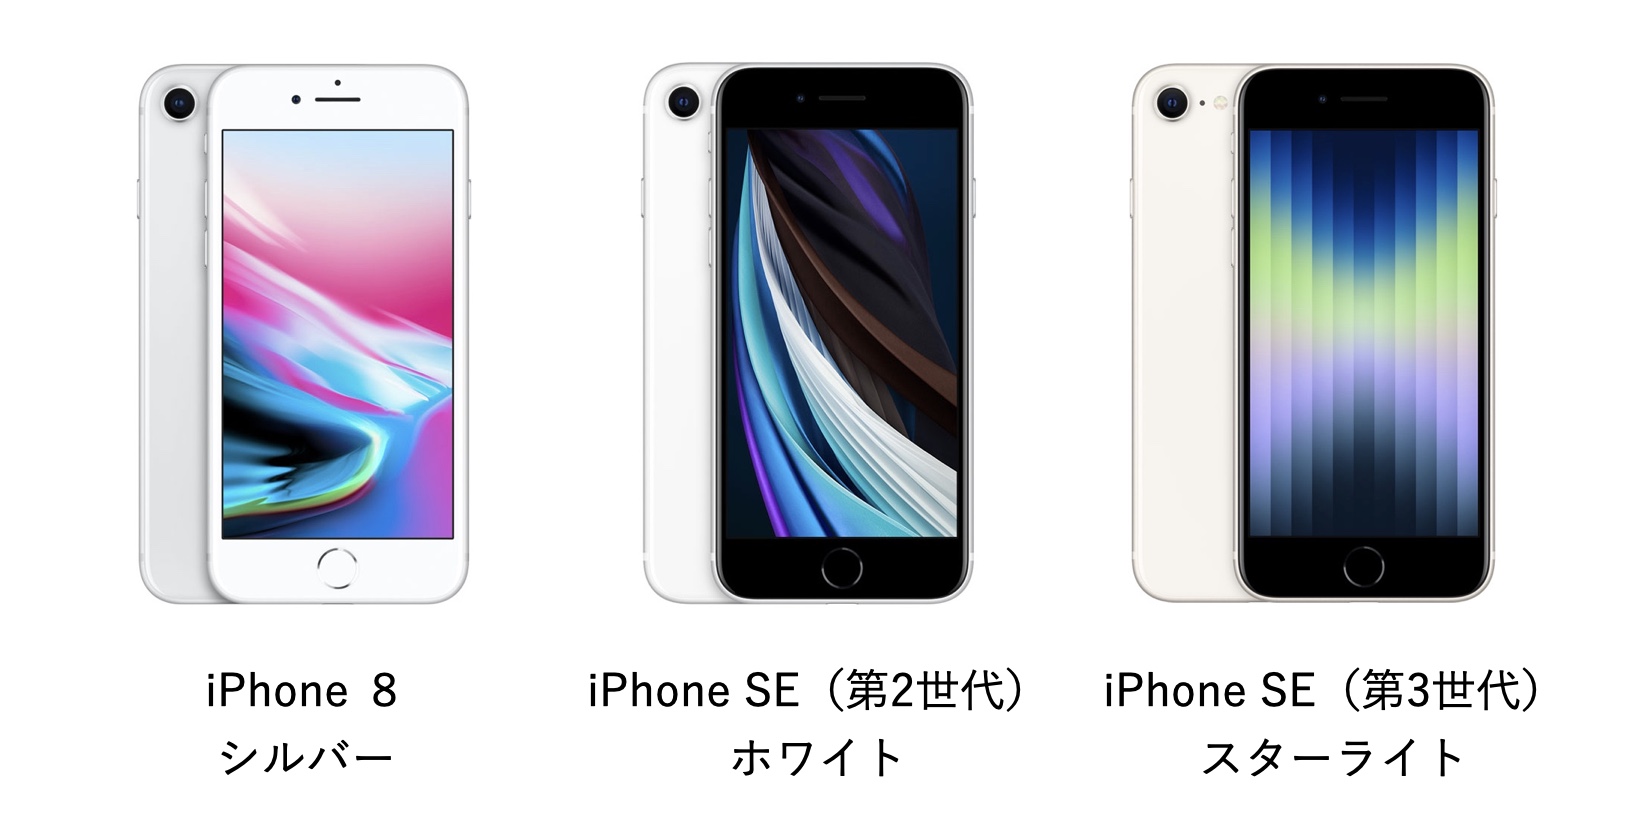 iPhone SE（第3世代）はどのカラーがおすすめ？新色情報と人気の色を 